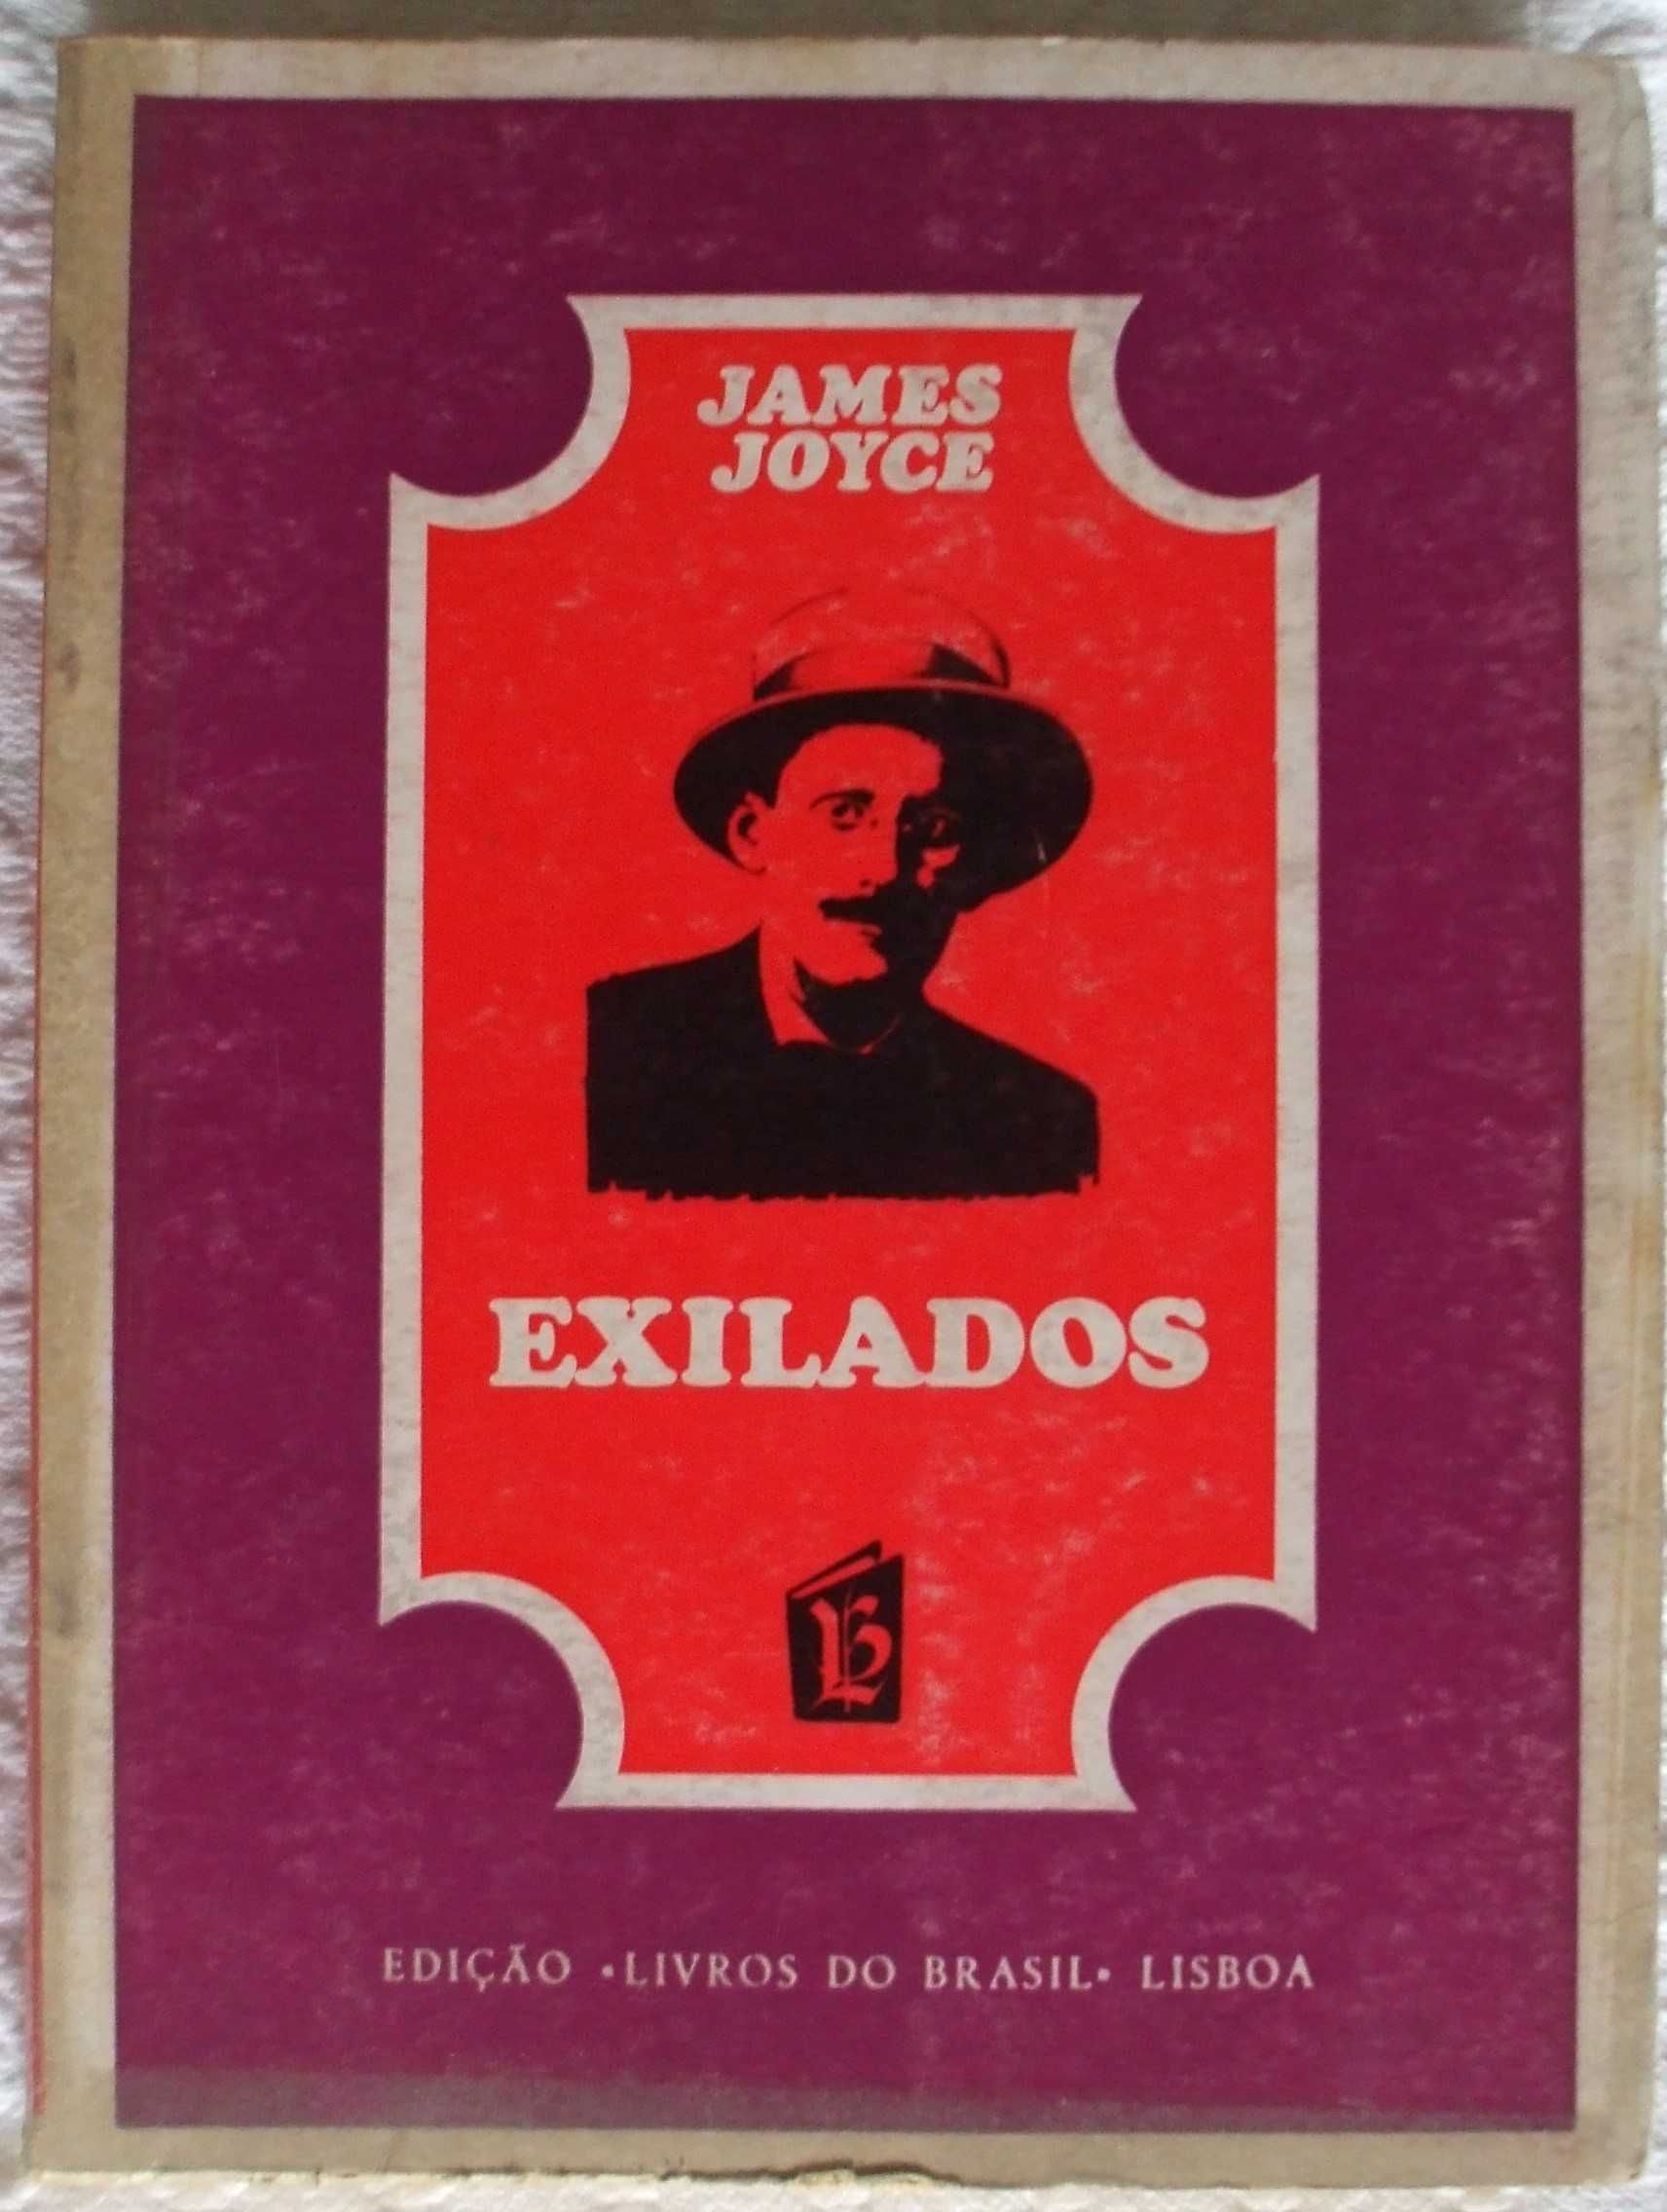 Exilados, James Joyce